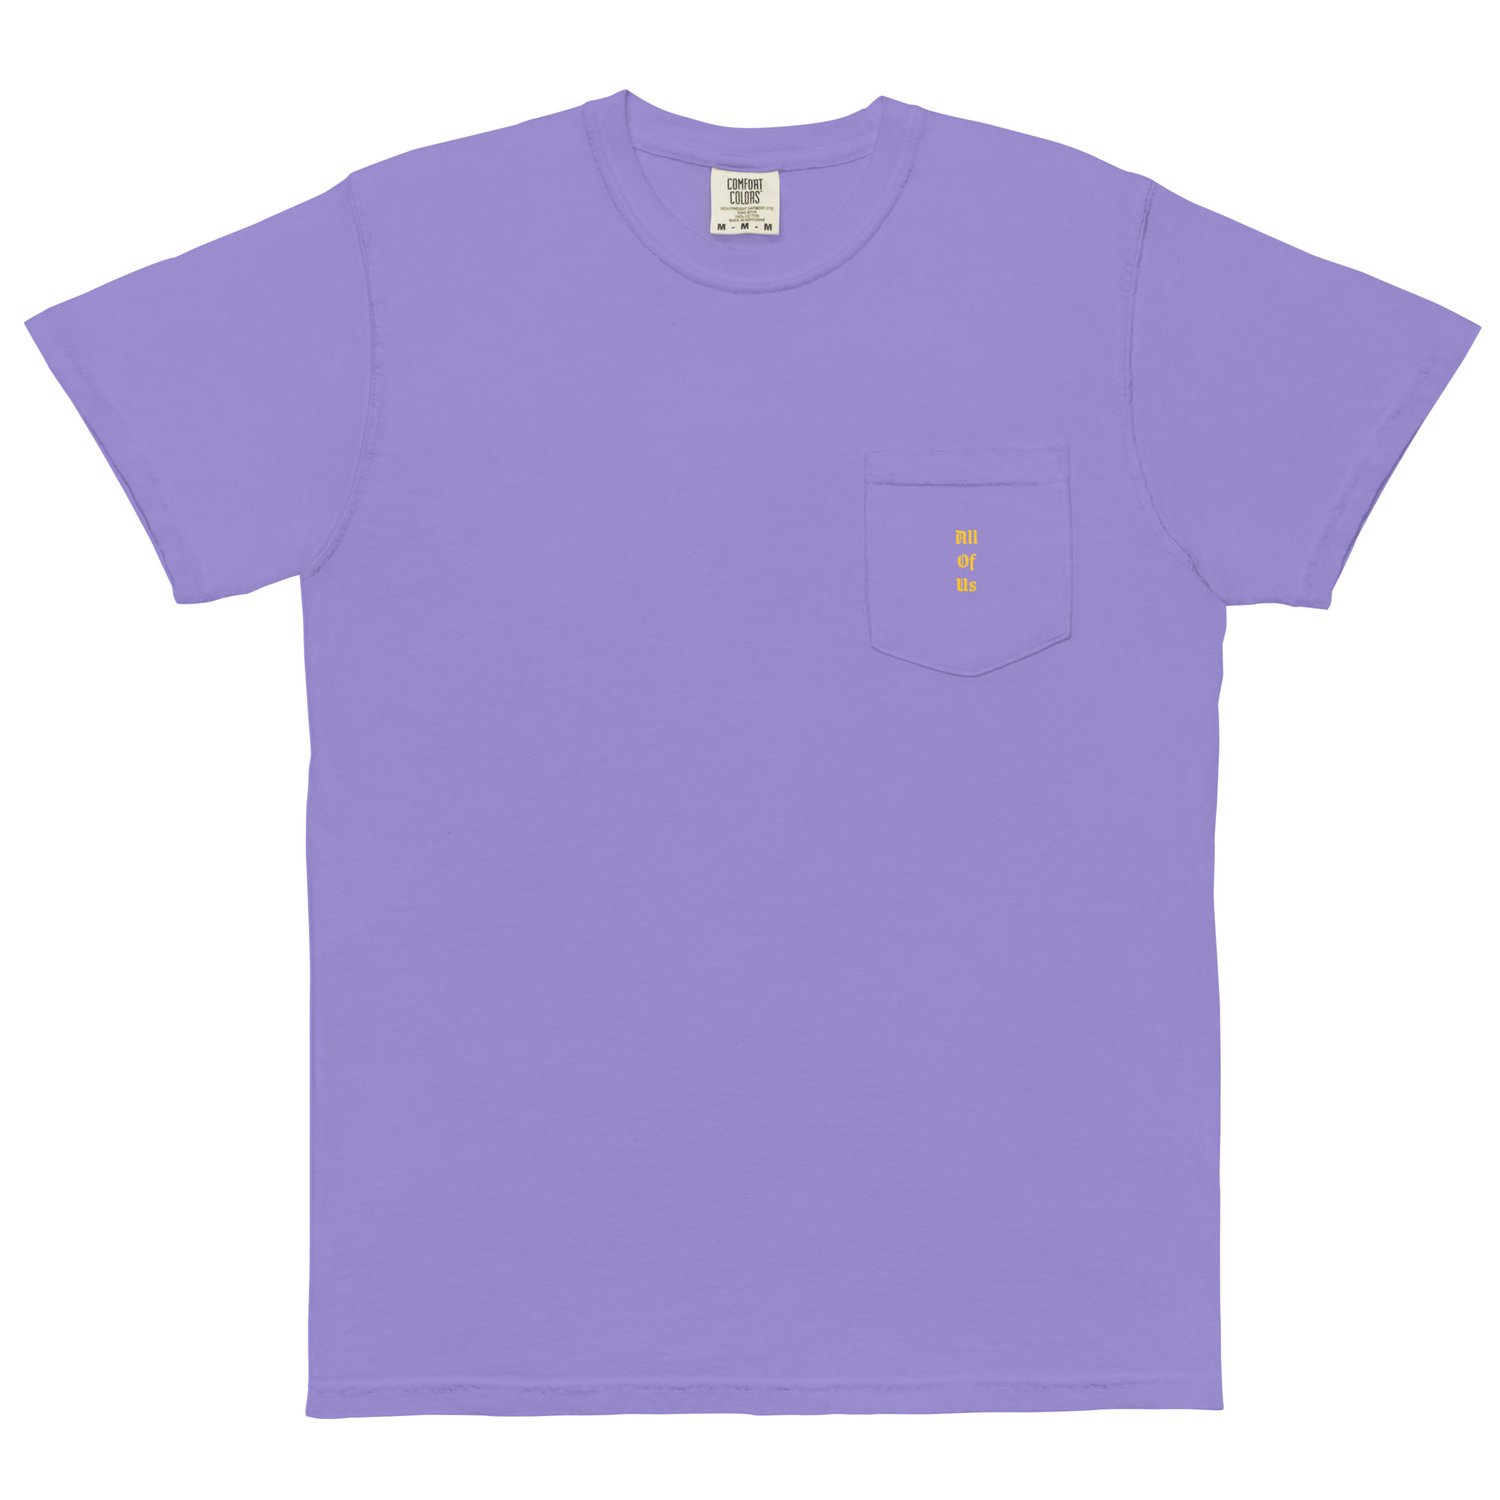 Image of "All Of Us" Unisex garment-dyed pocket t-shirt